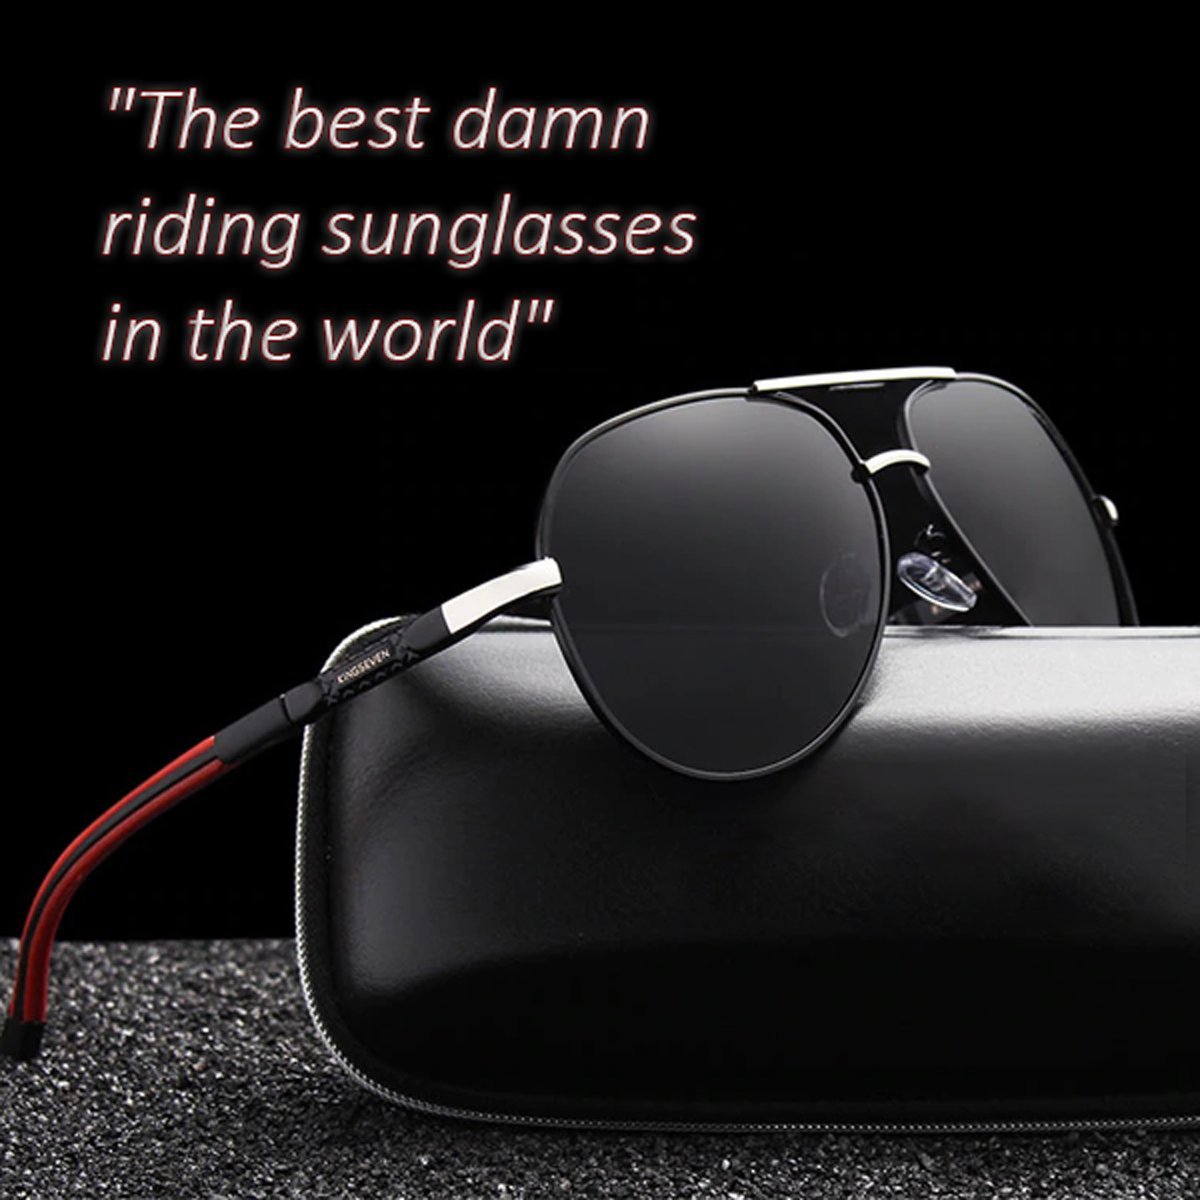 Best Damn Riding Sunglasses